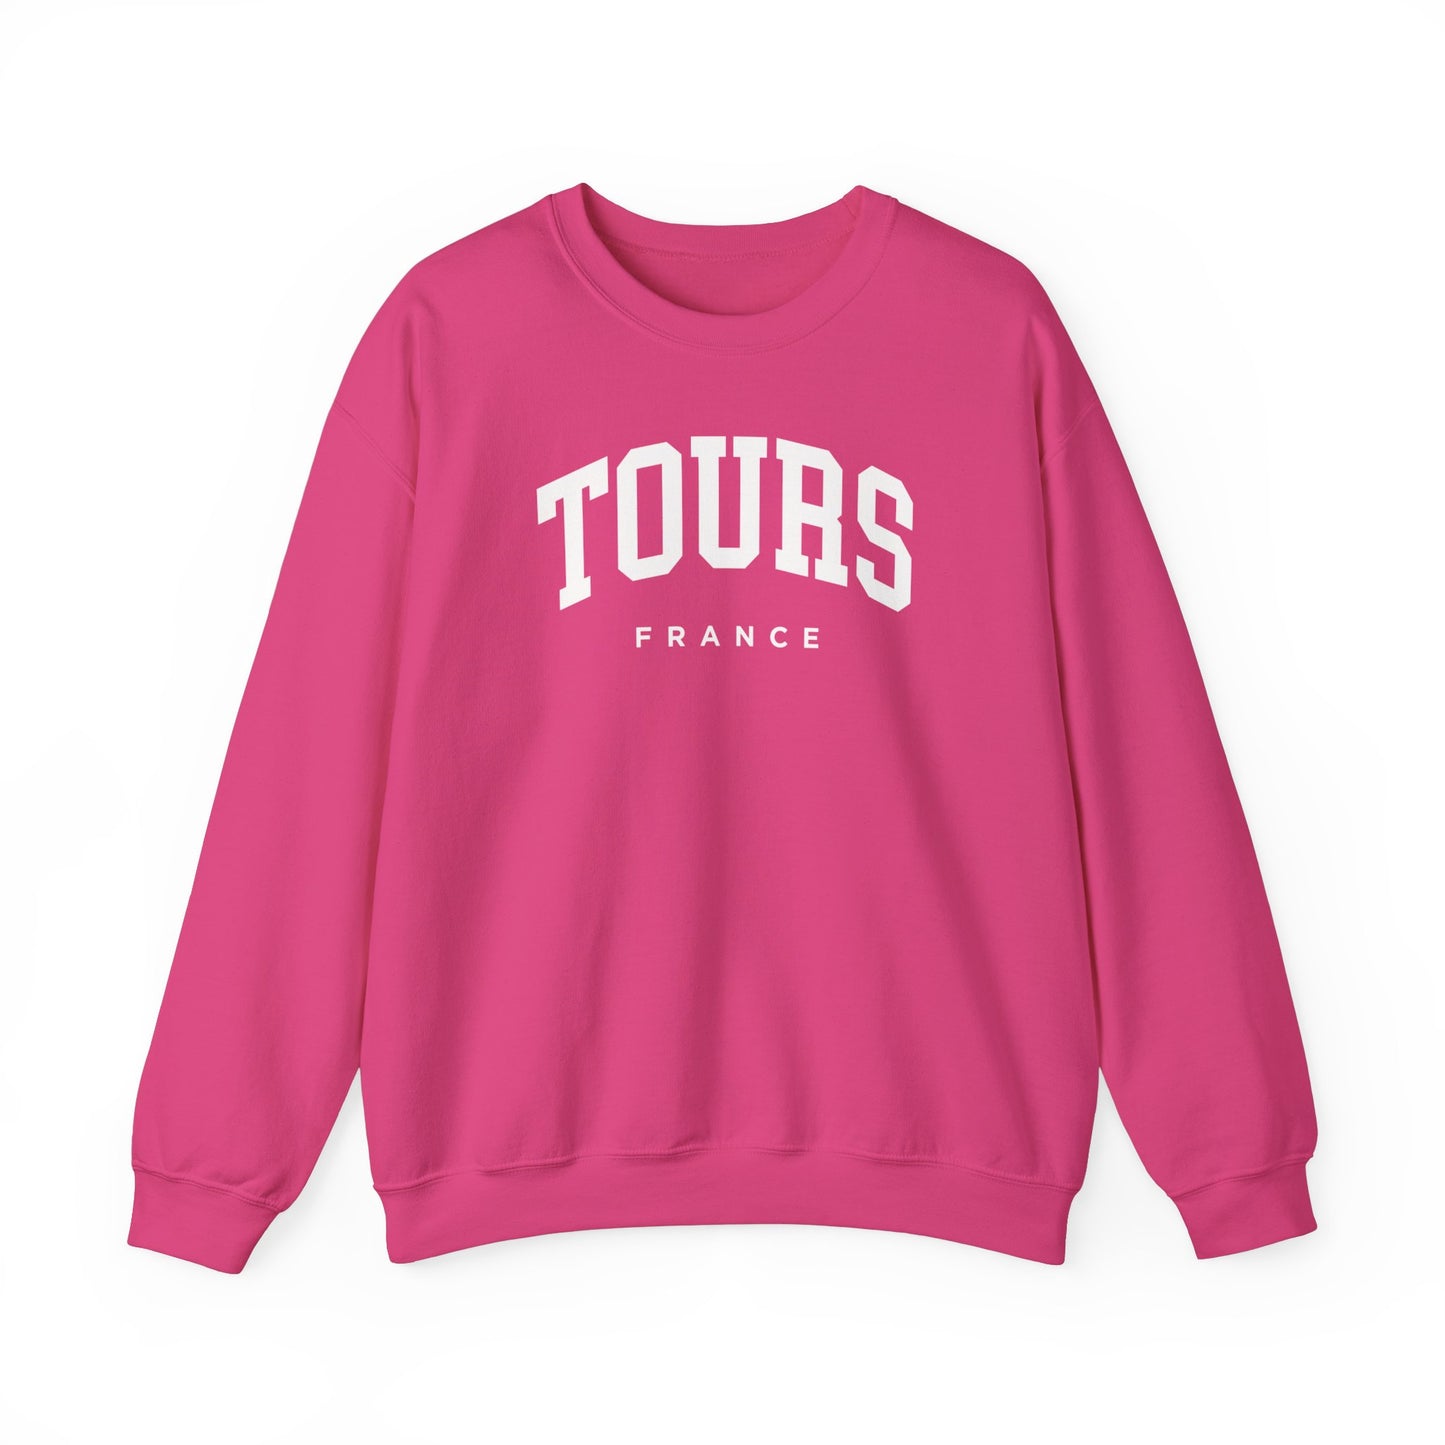 Tours France Sweatshirt